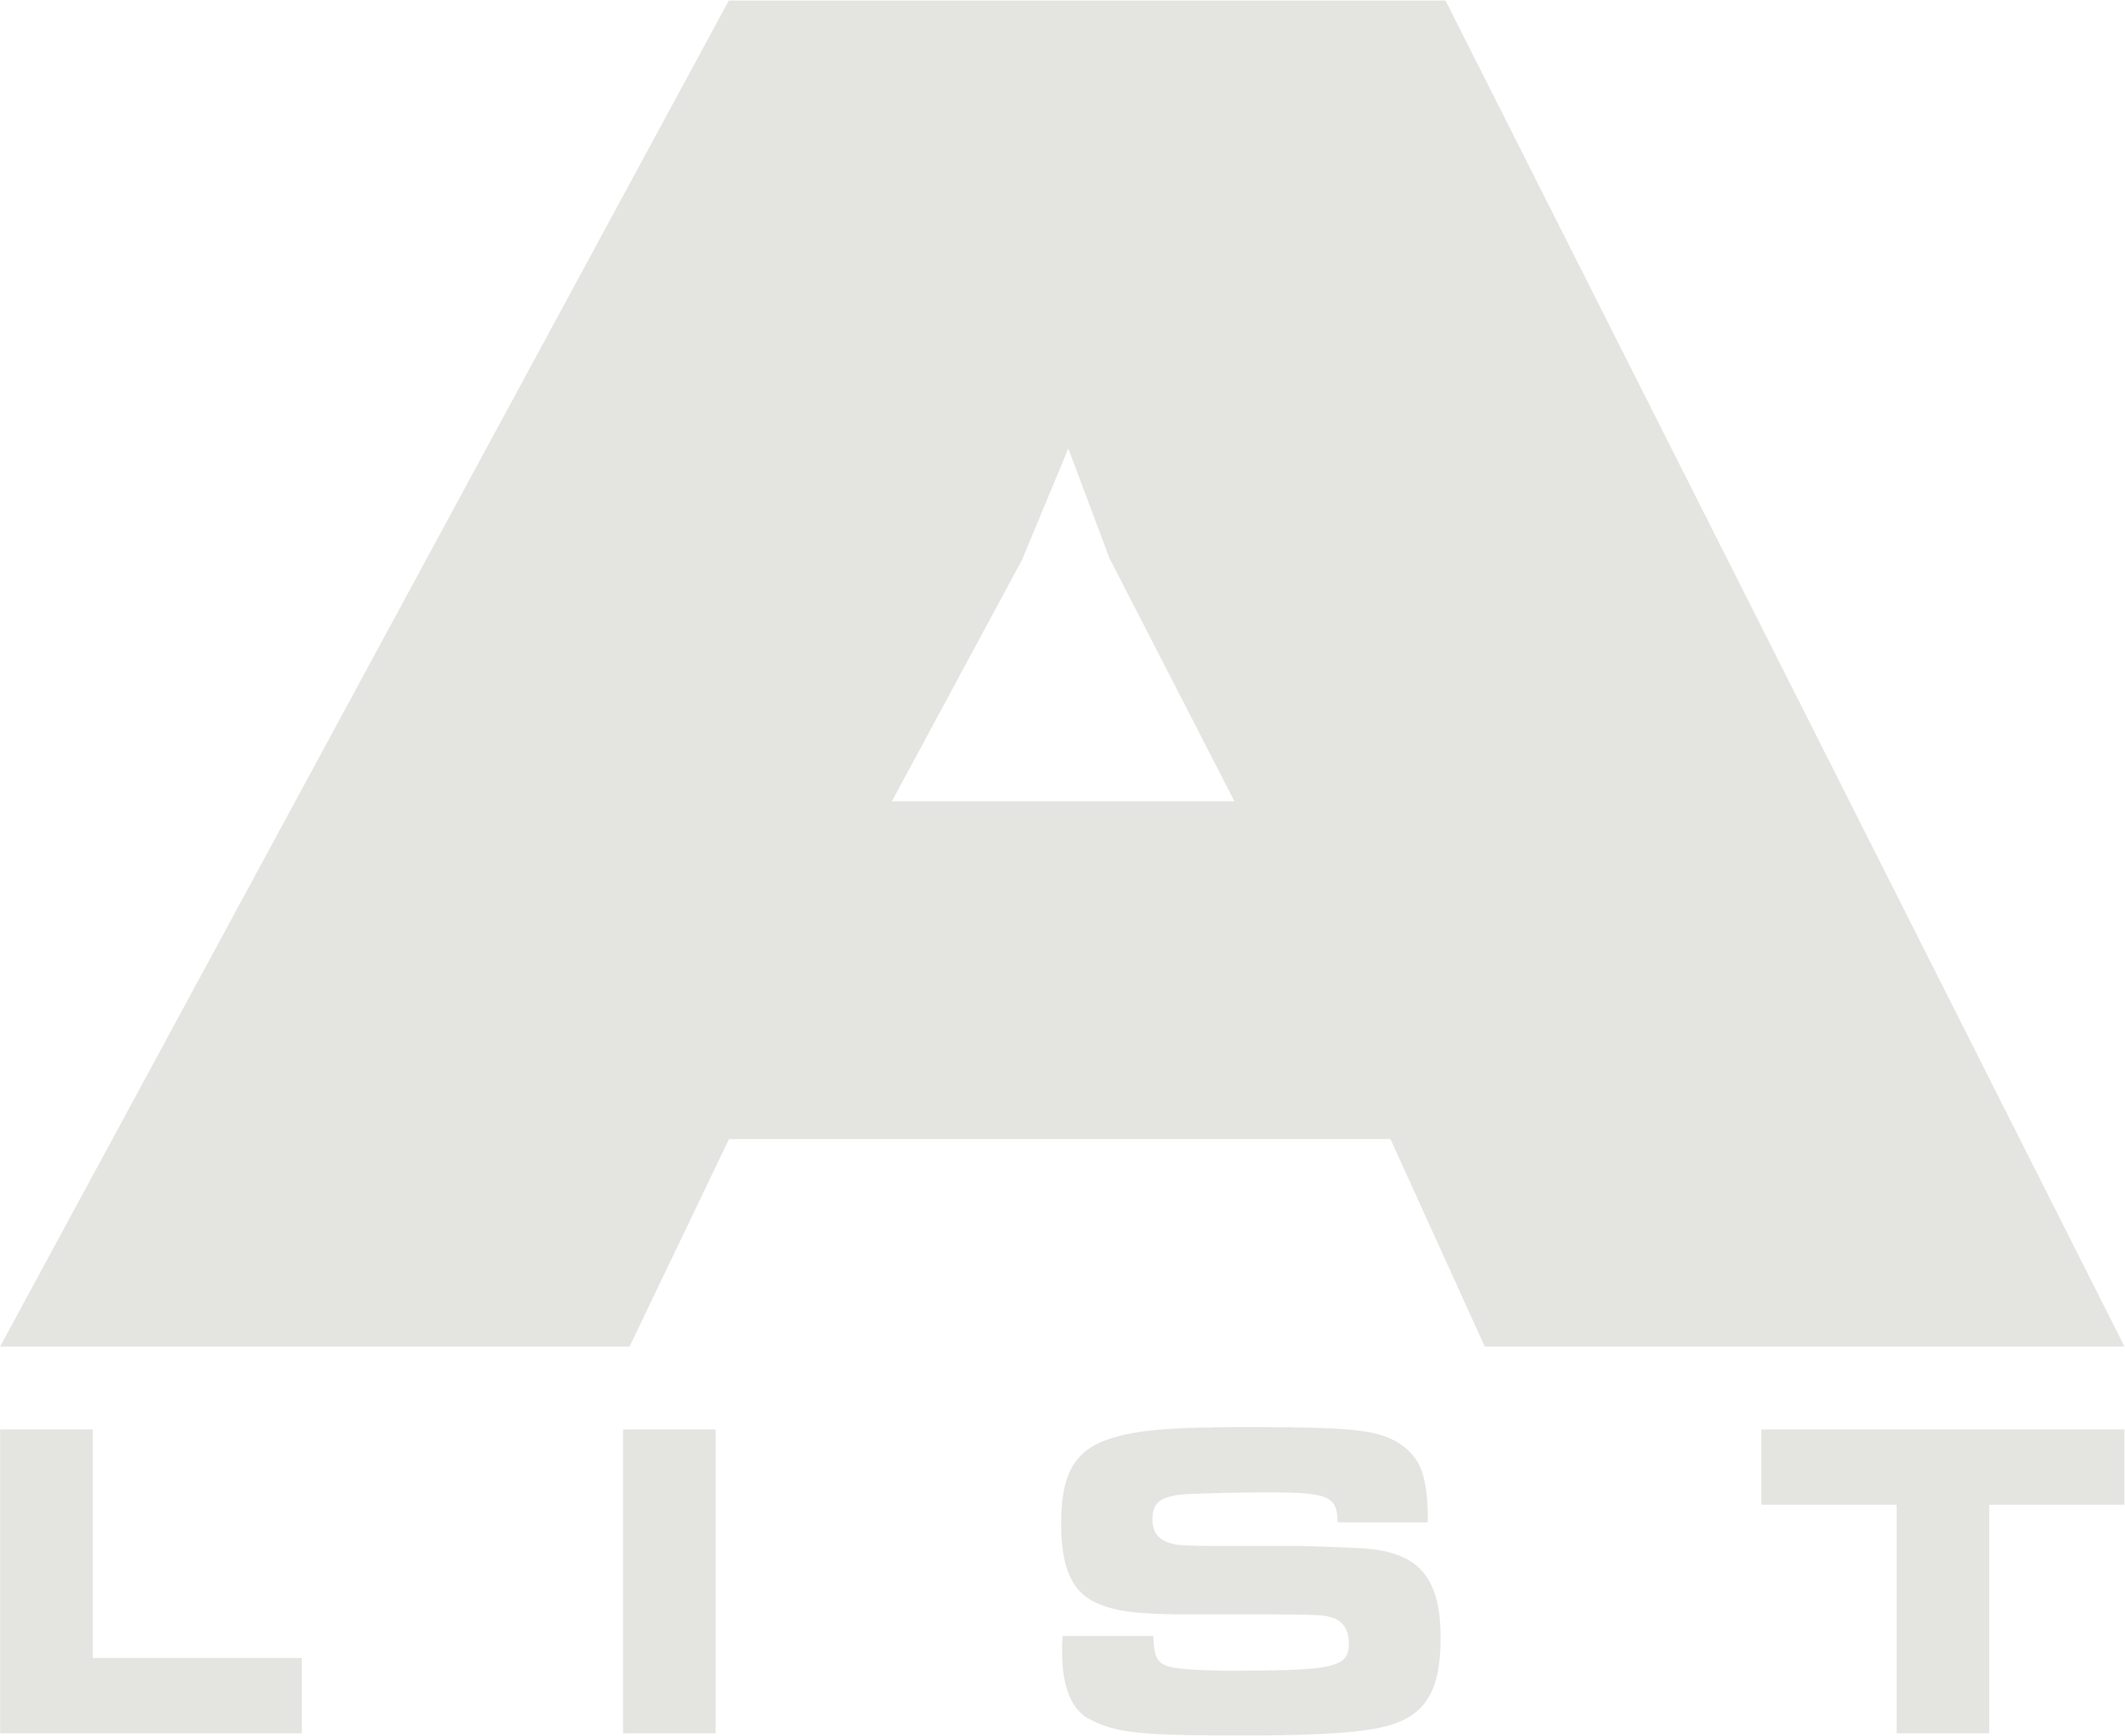 A List logo